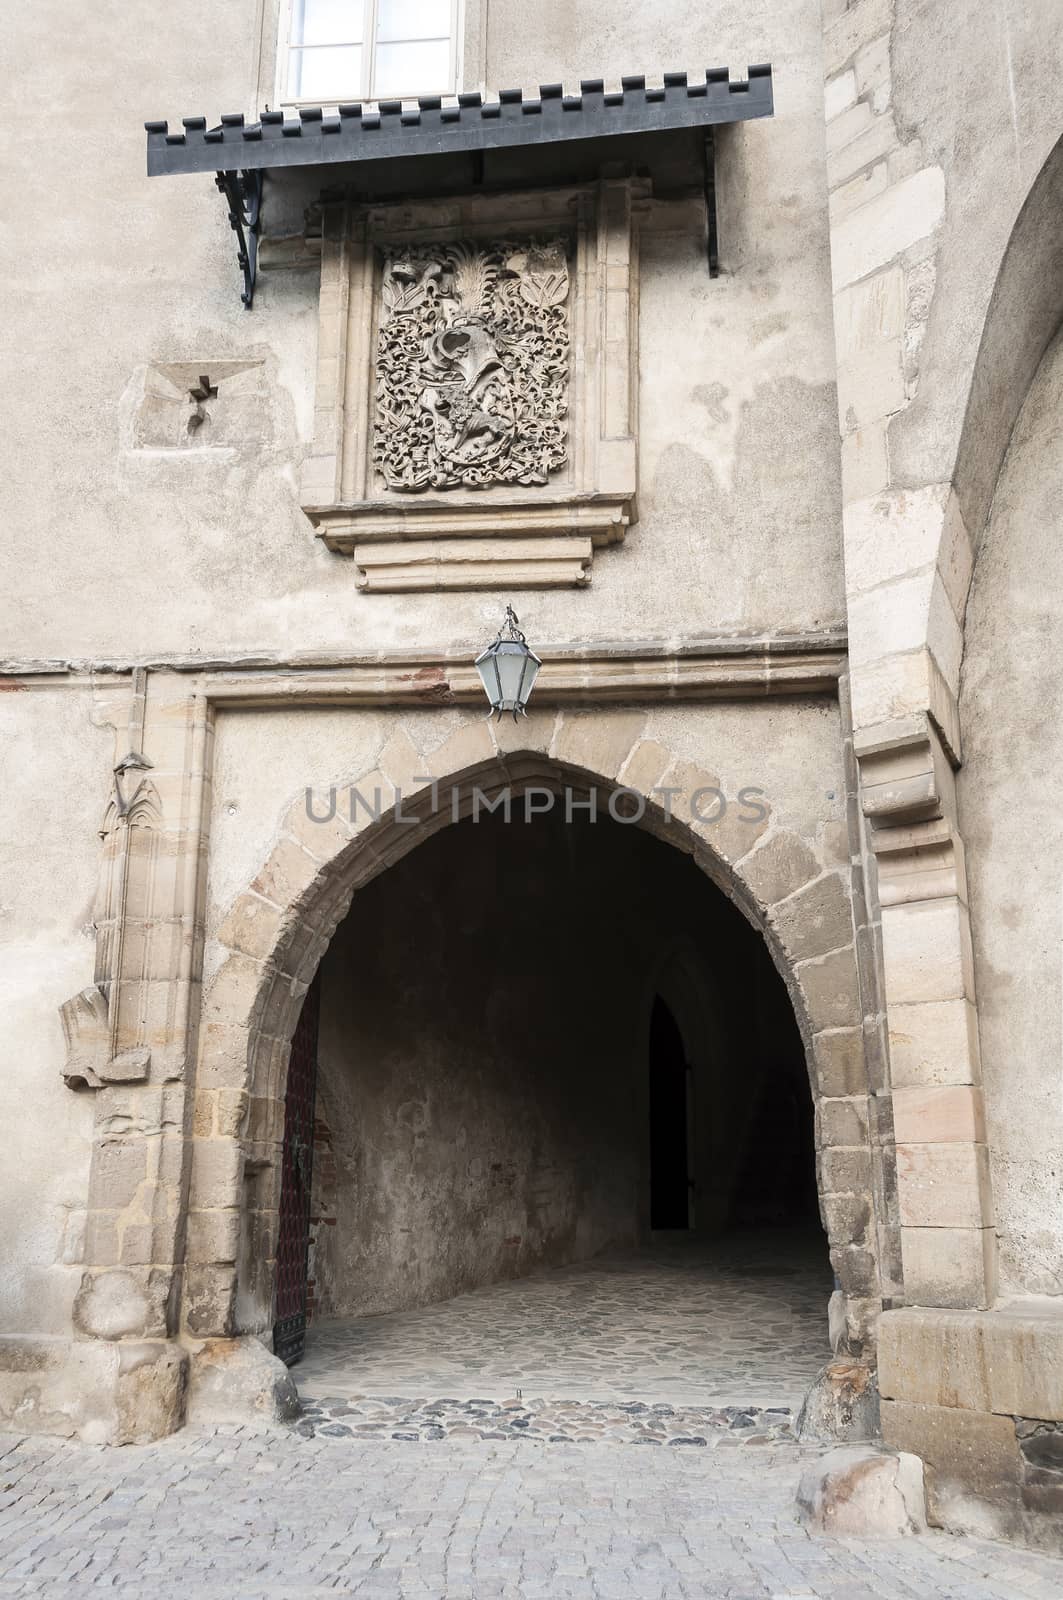 Medieval castle door in Central Bohemia, Czech Republic.